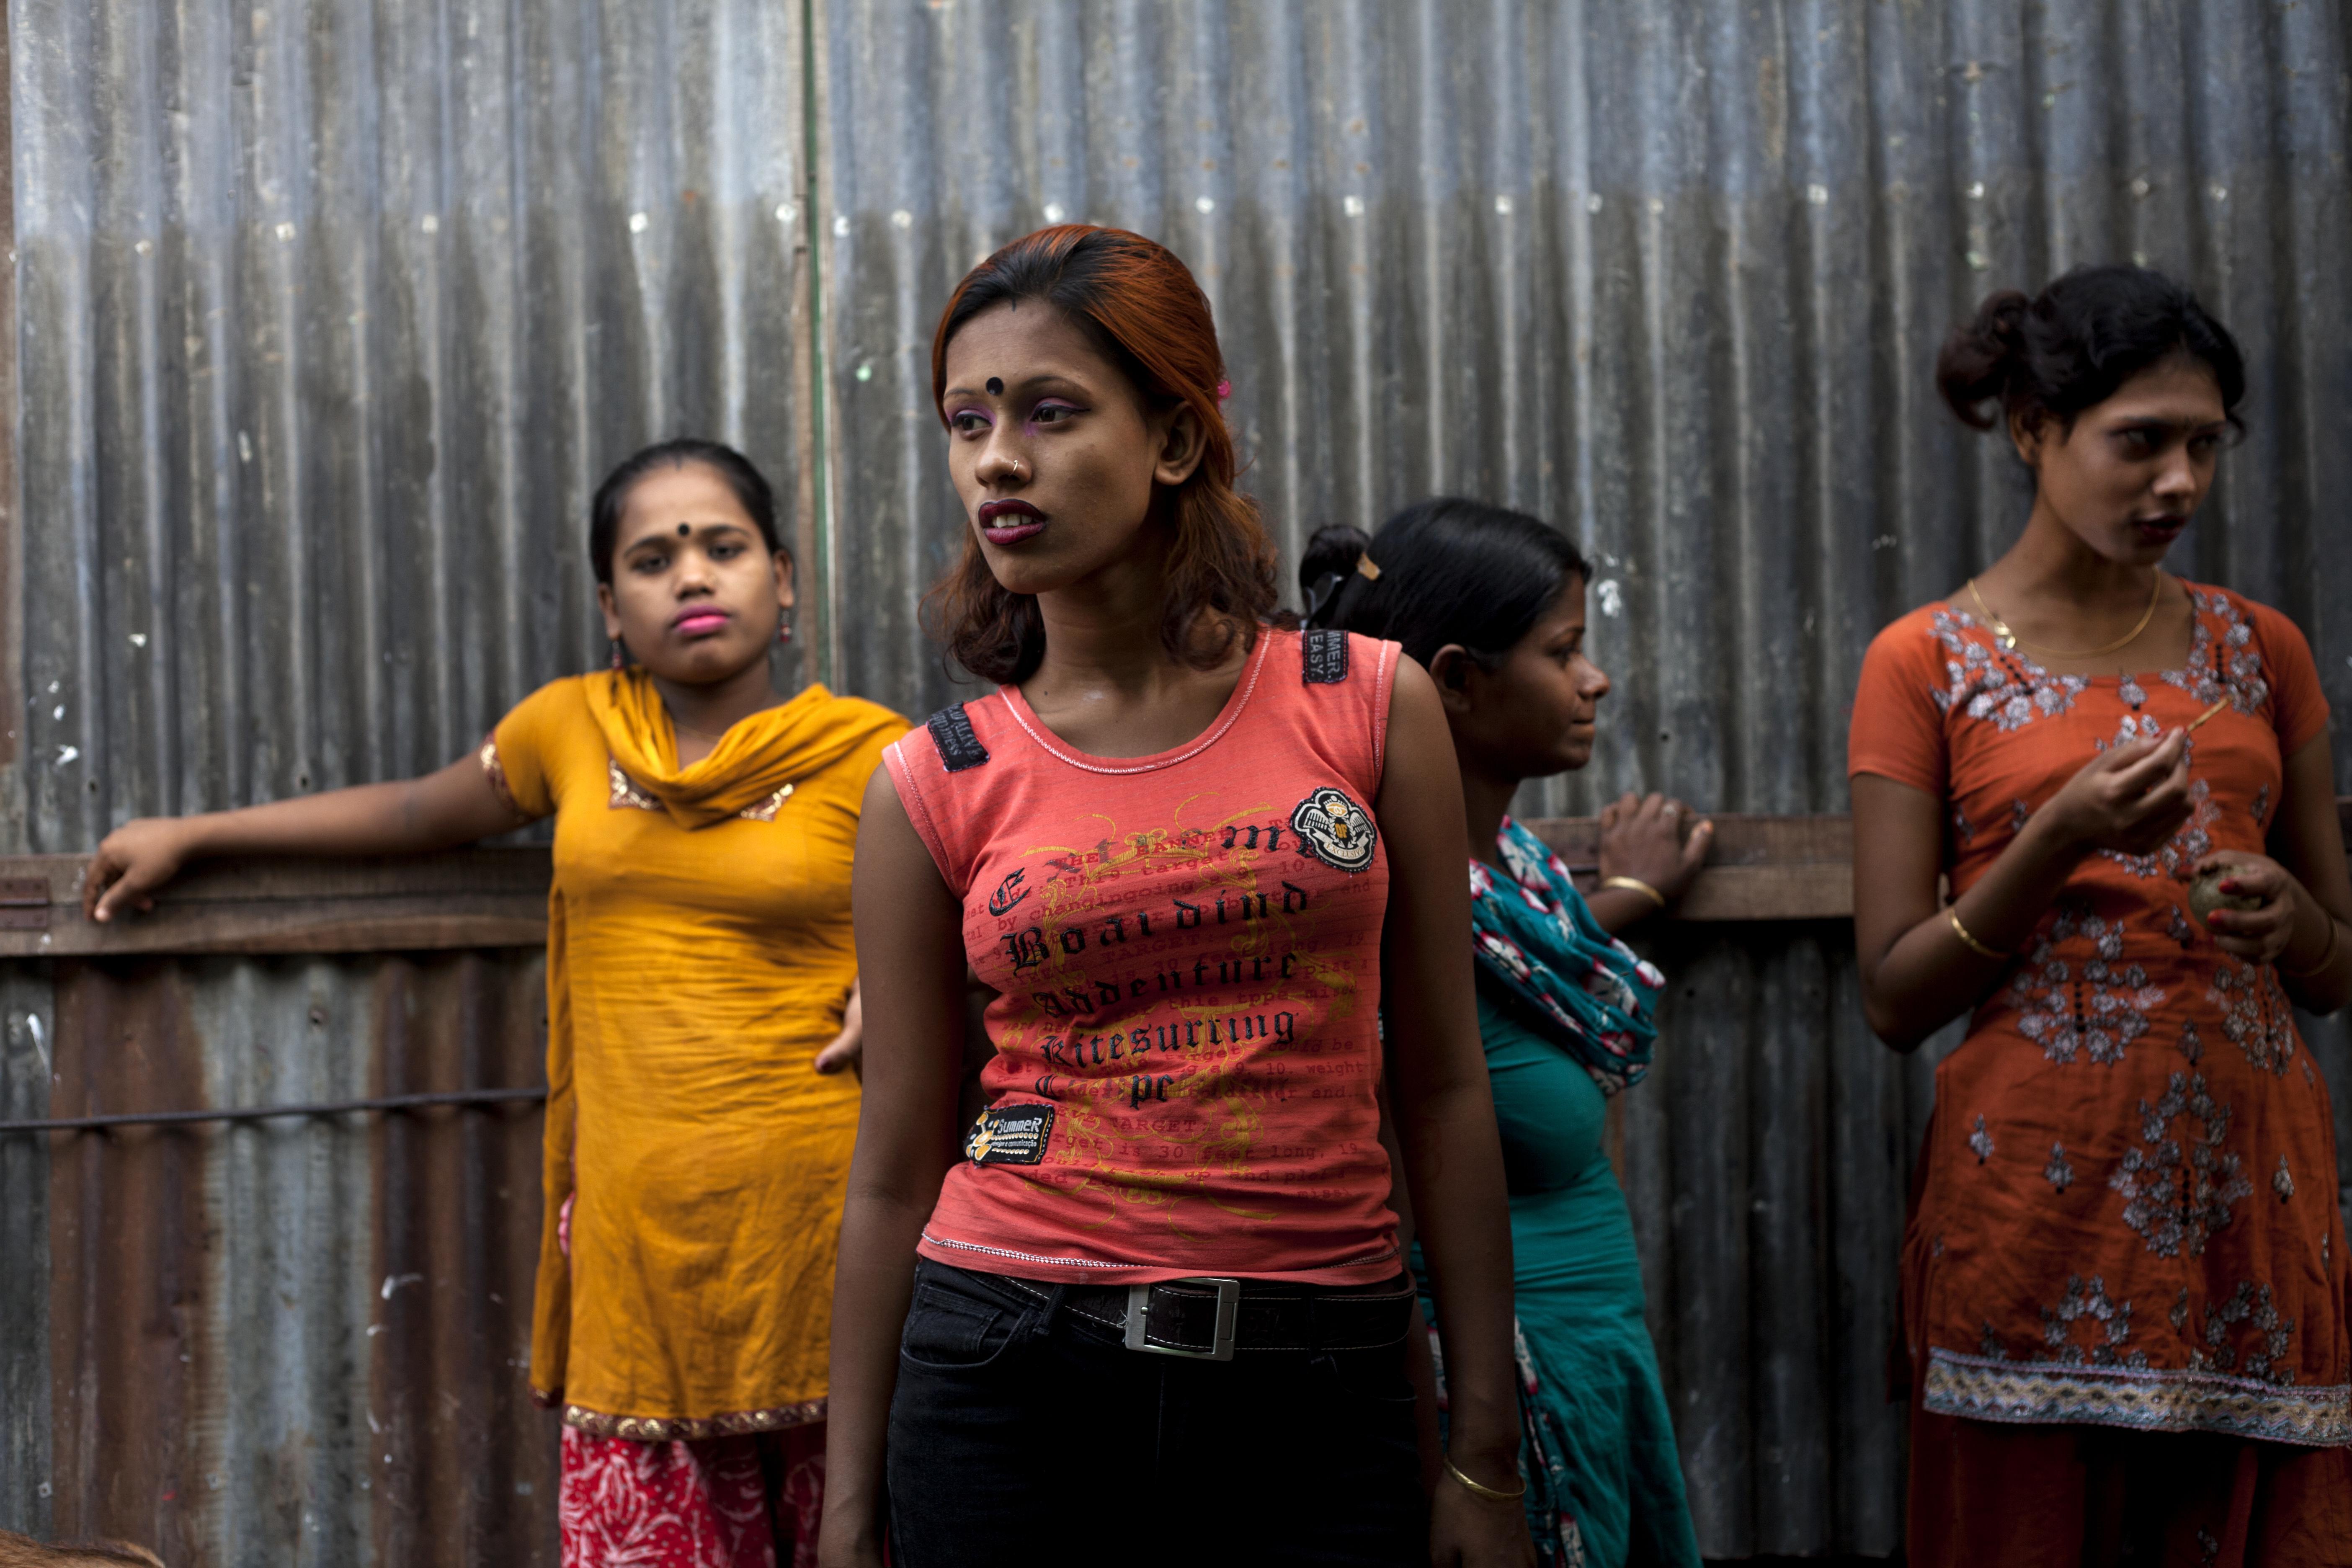  Girls in Sirajganj, Bangladesh